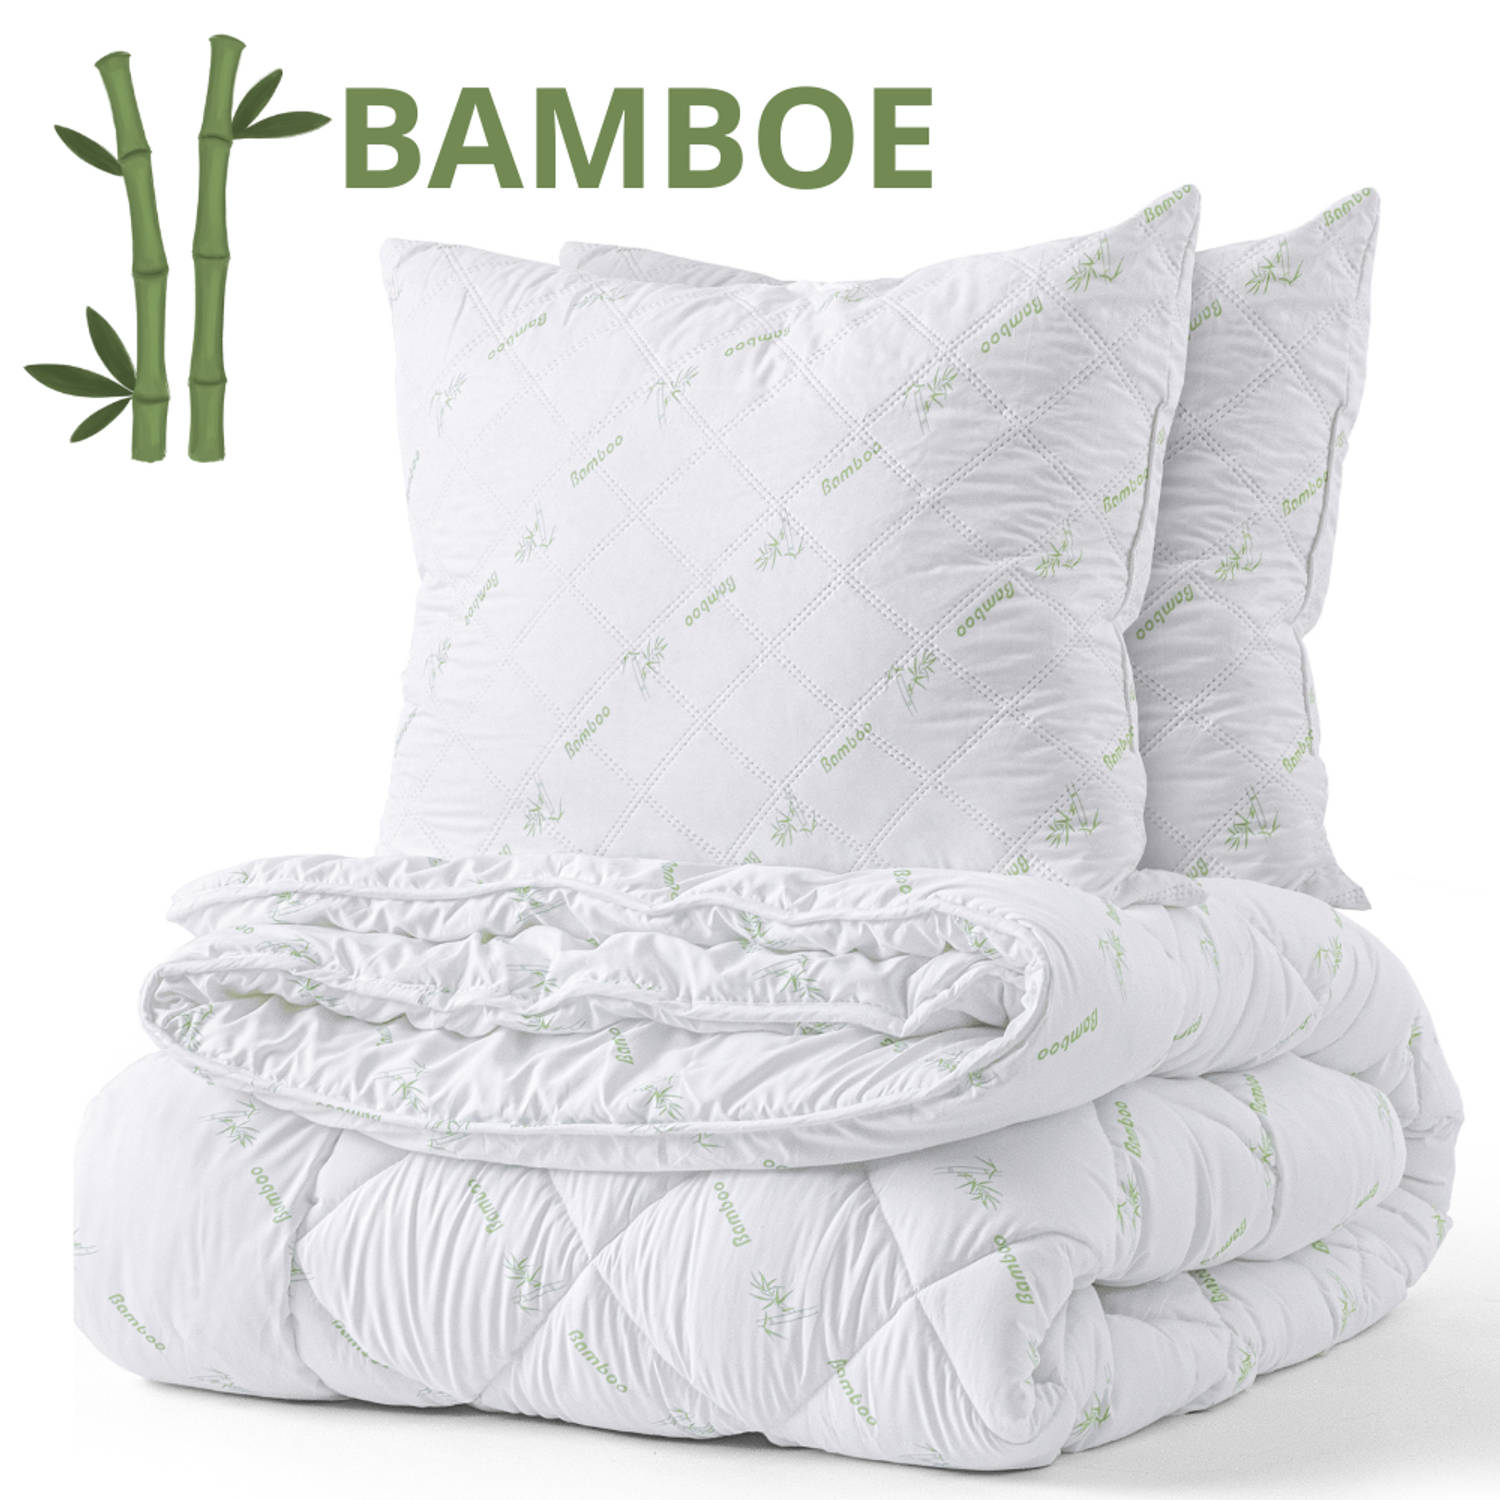 Bamboe Dekbed + 2 Bamboe Hoofdkussen - Lits-Jumeaux 240x220 cm - Extra Lang - Warmteklasse 2 - Anti-allergisch + Gratis Kussenslopen twv € 16,95